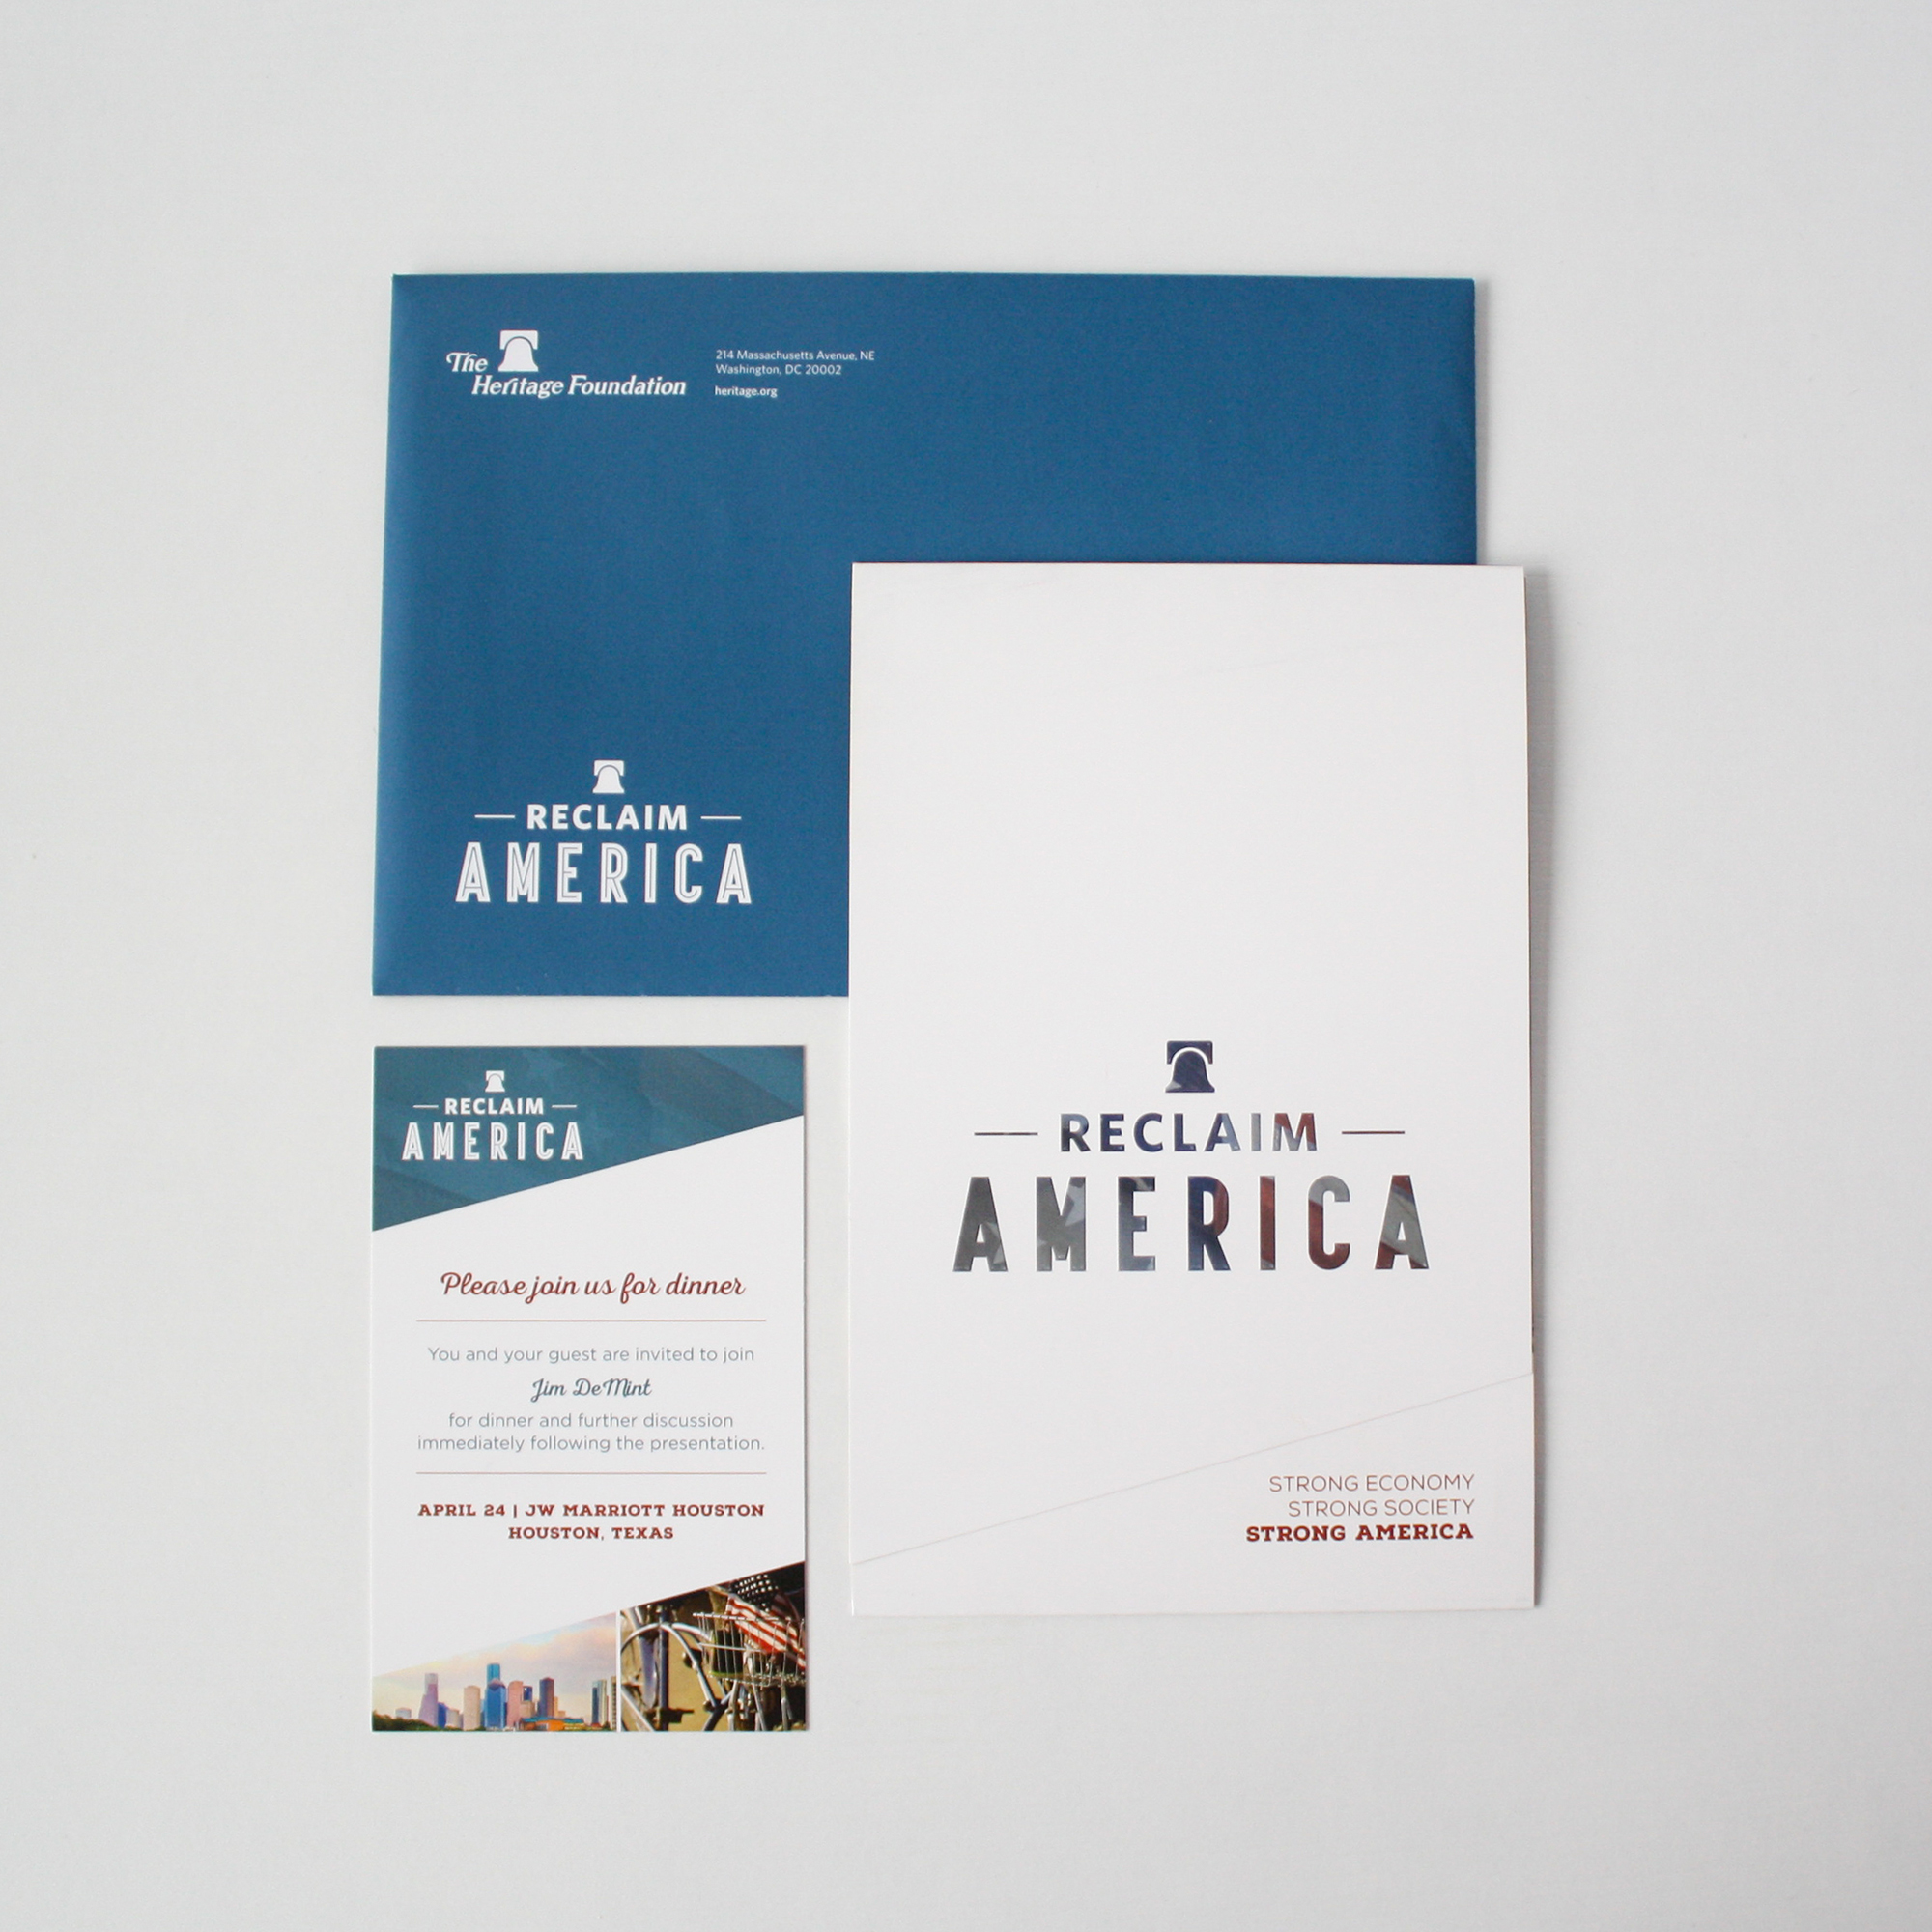 Reclaim America Campaign | Corporate Event Invitation | Casi Long Design | casilong.com:portfolio | #casilongdesign #fearlesspursuit Thumbnail.jpg